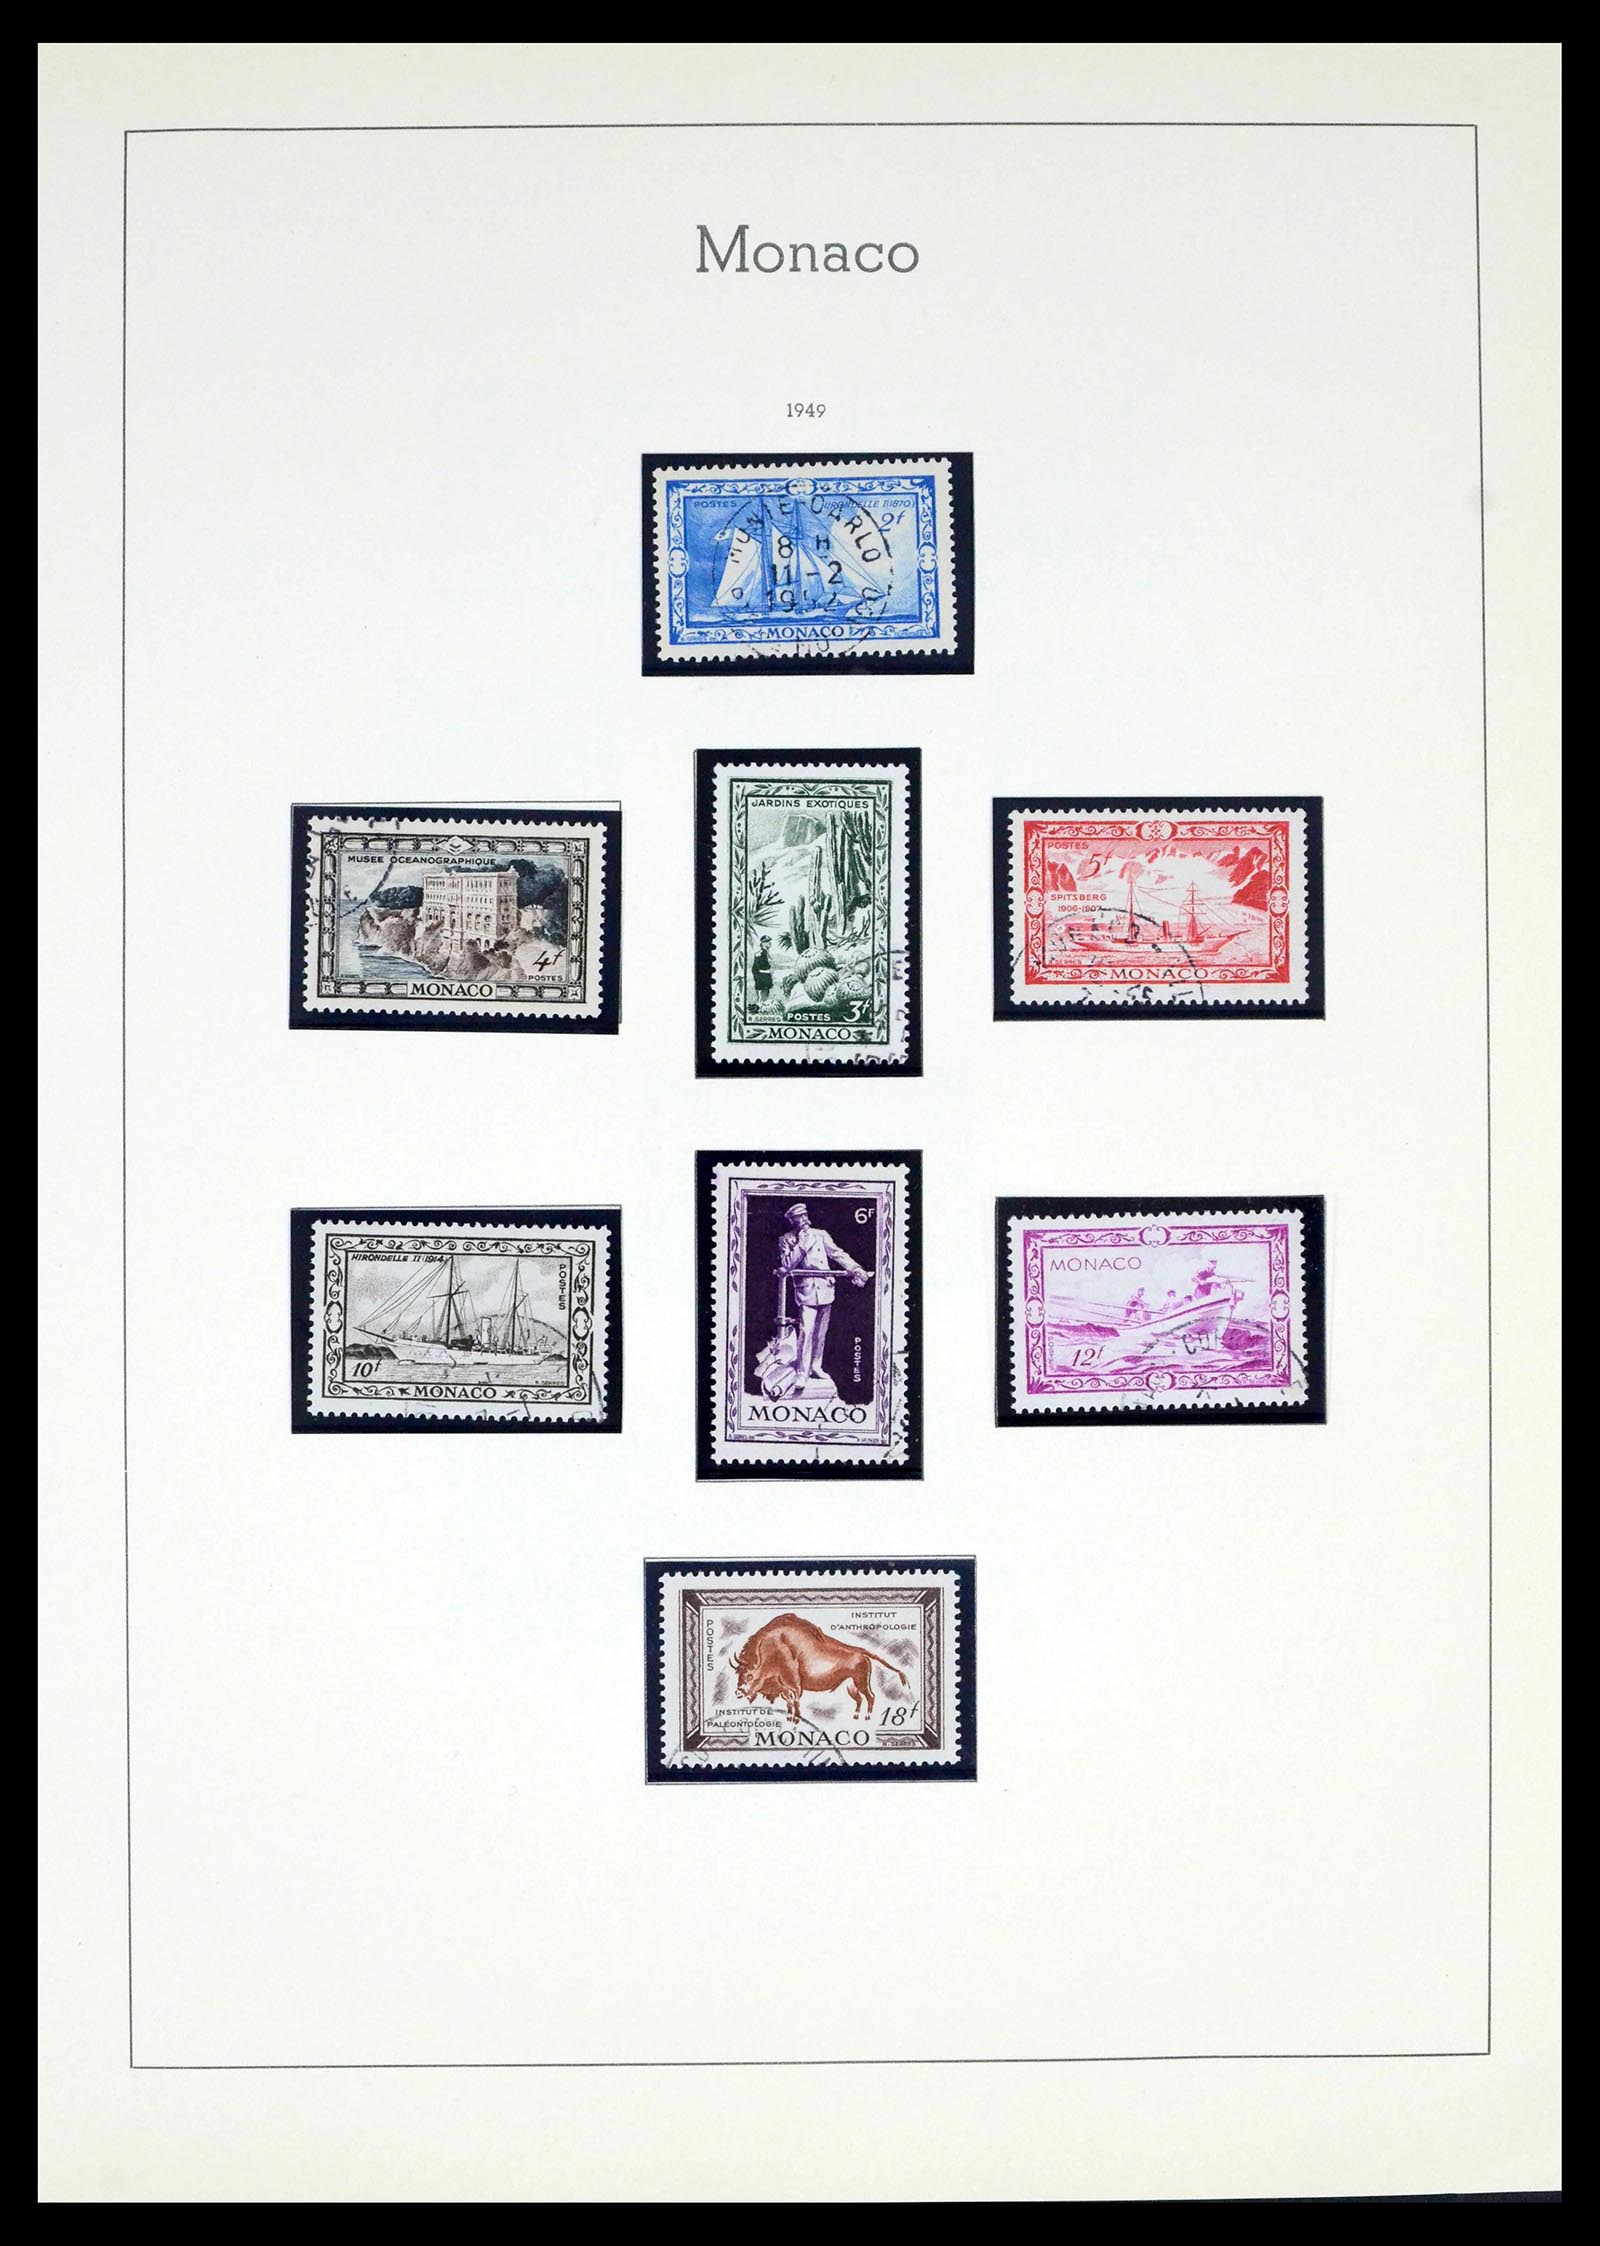 39392 0031 - Stamp collection 39392 Monaco 1885-1999.